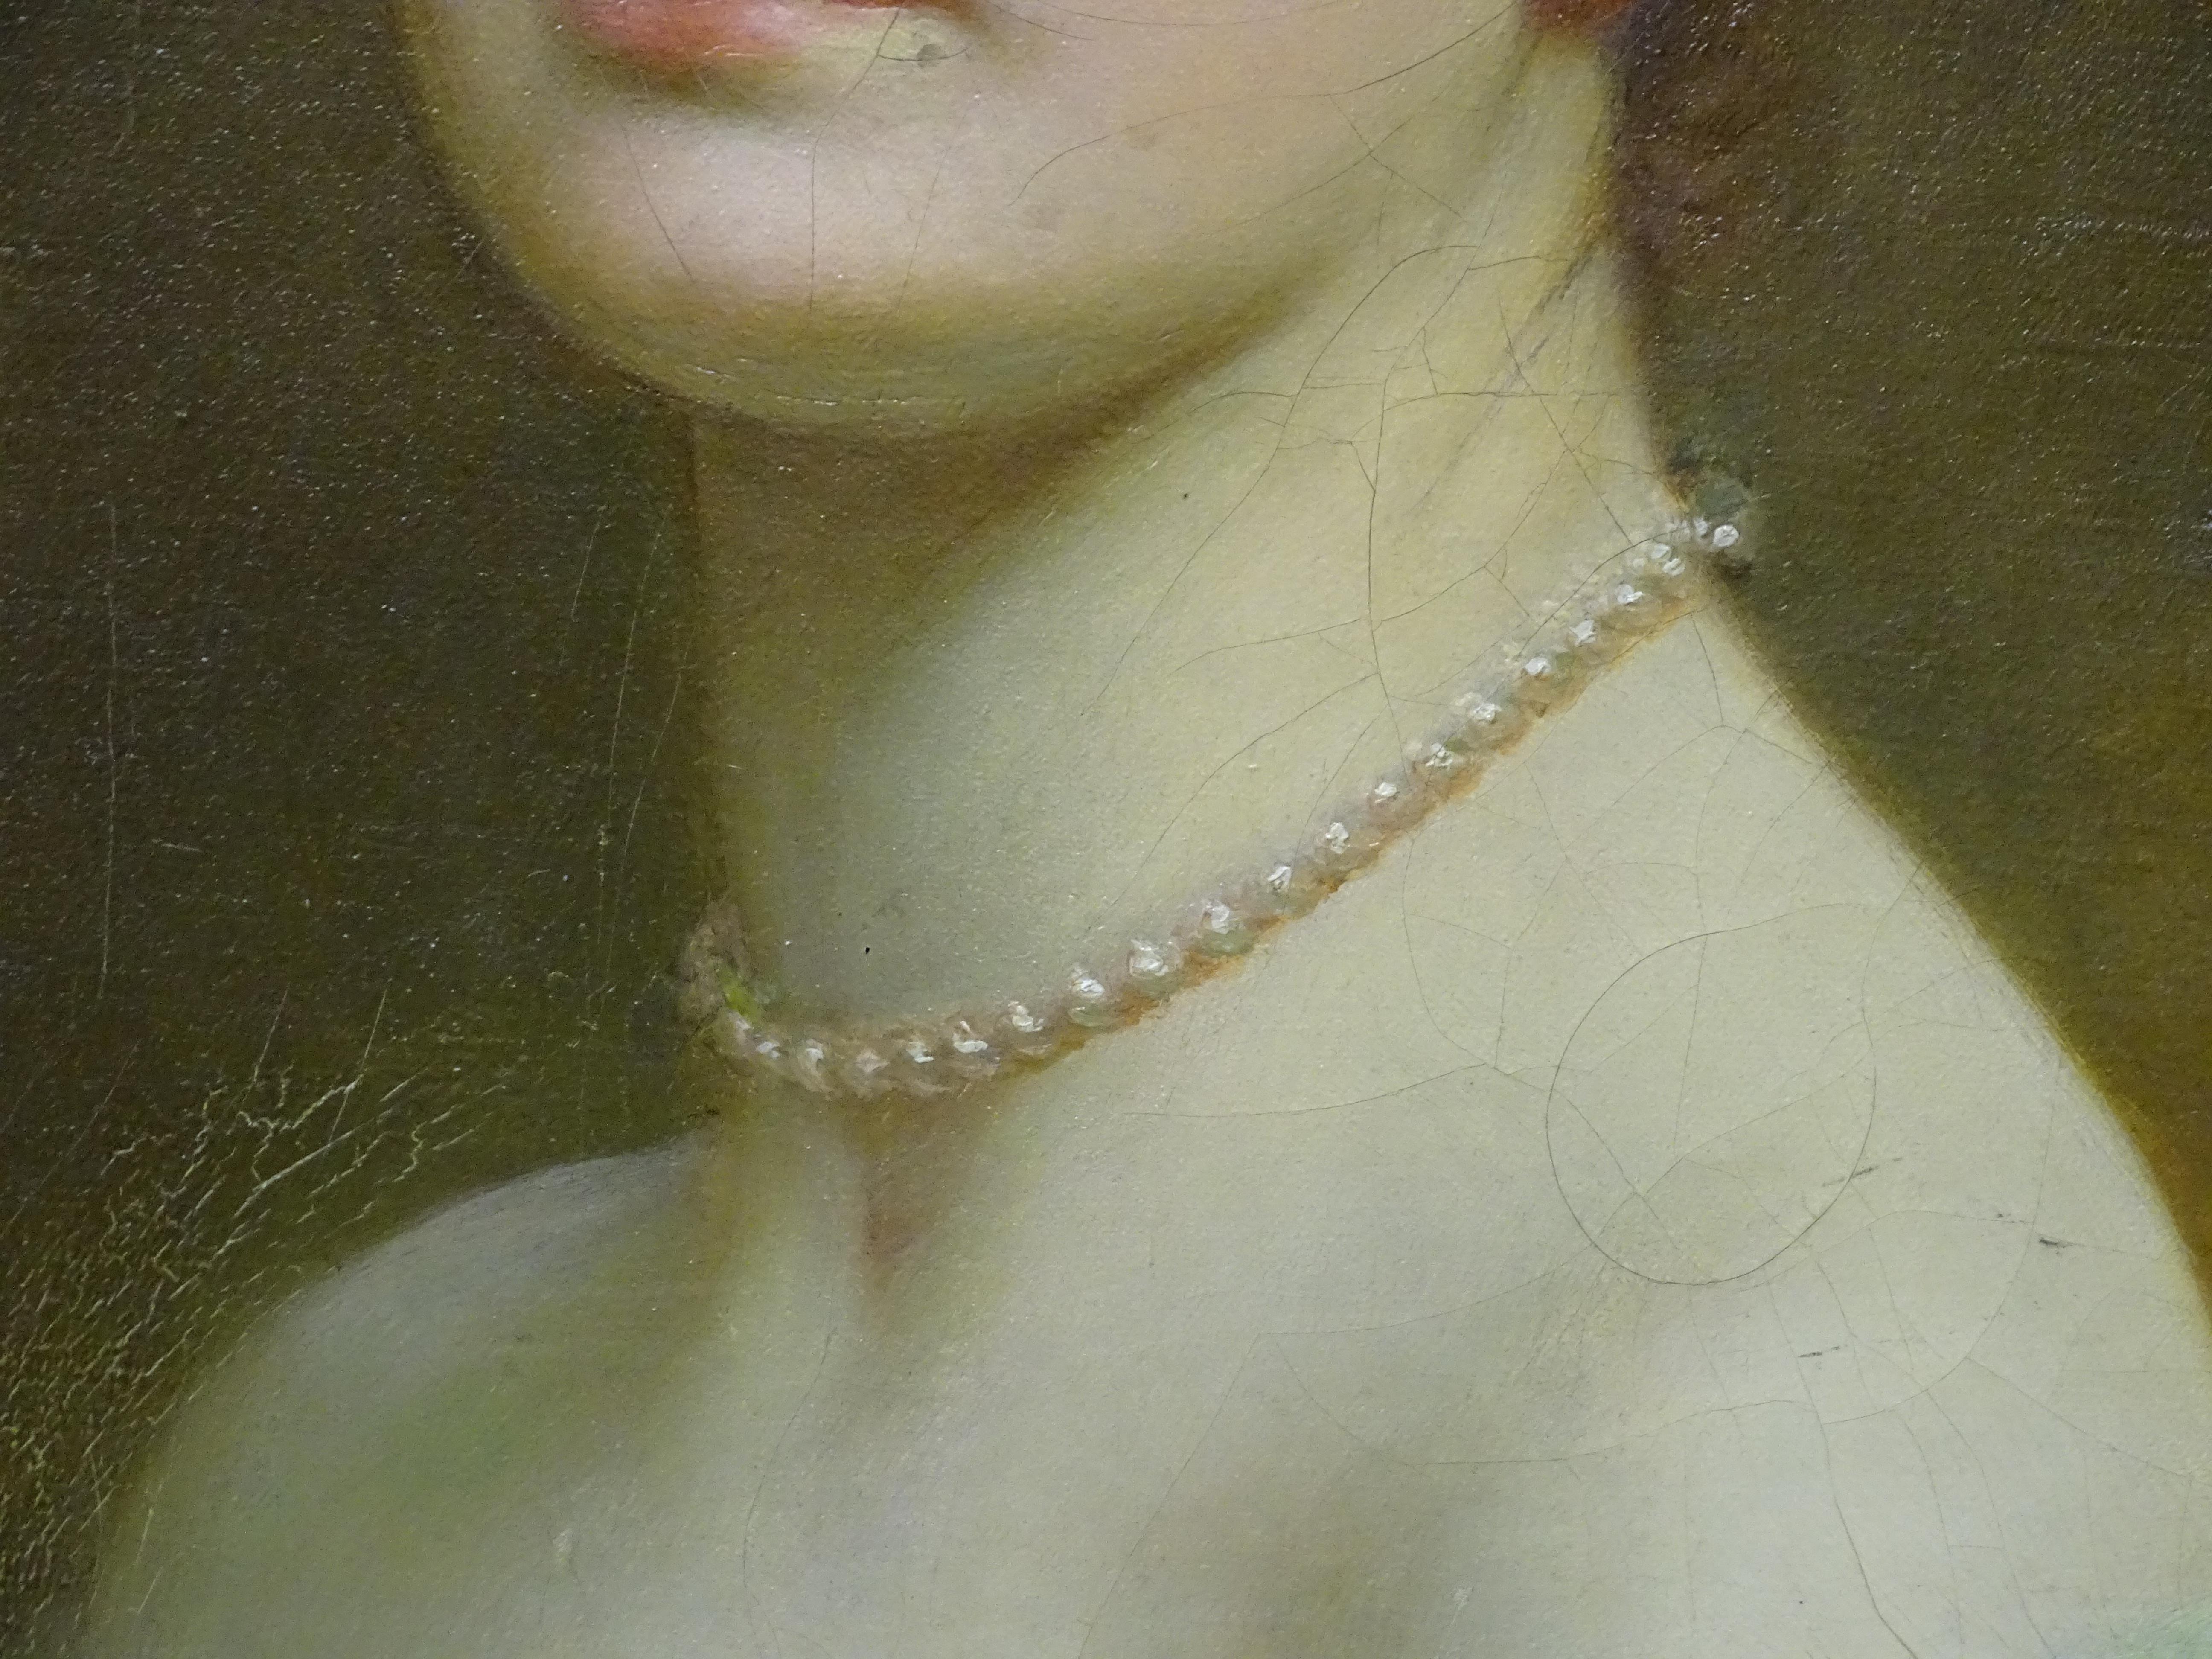 19th century portrait paintings